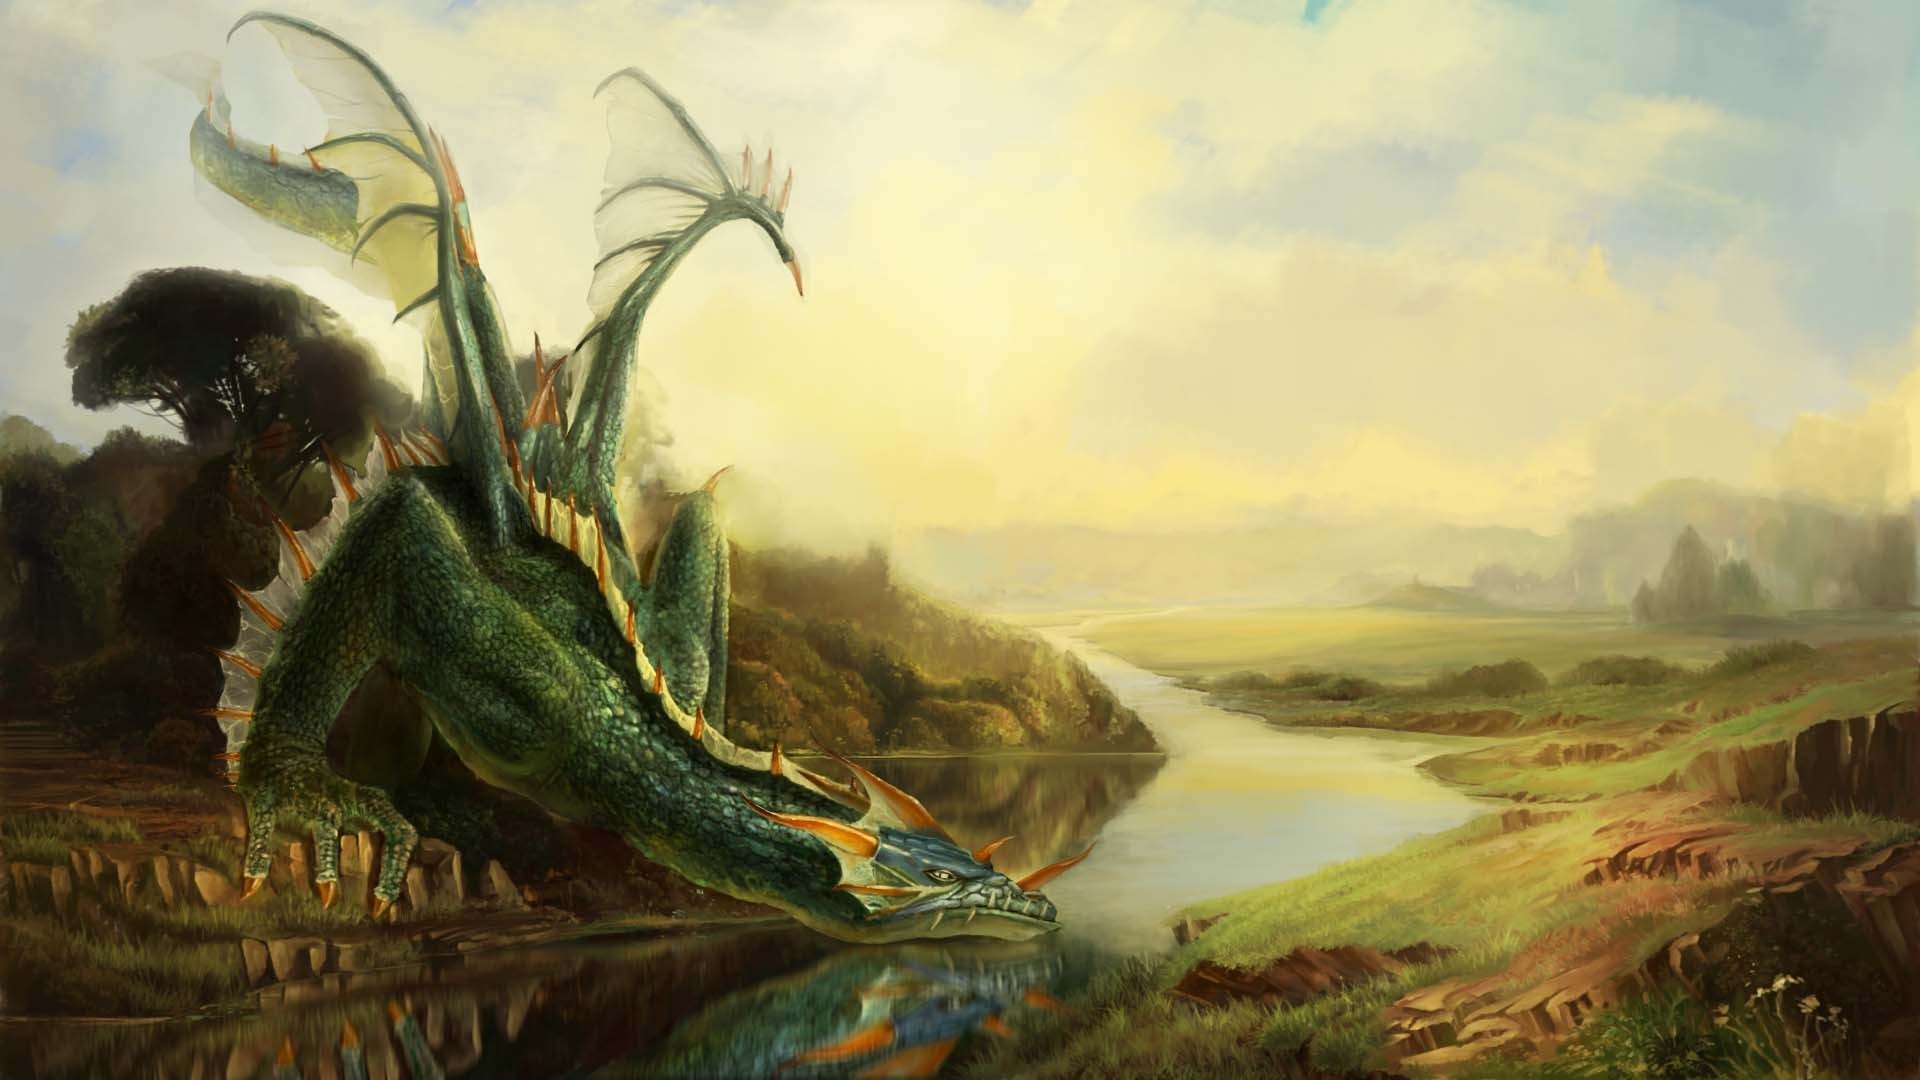 General 1920x1080 digital art fantasy art dragon nature river rocks trees grass wings clouds creature